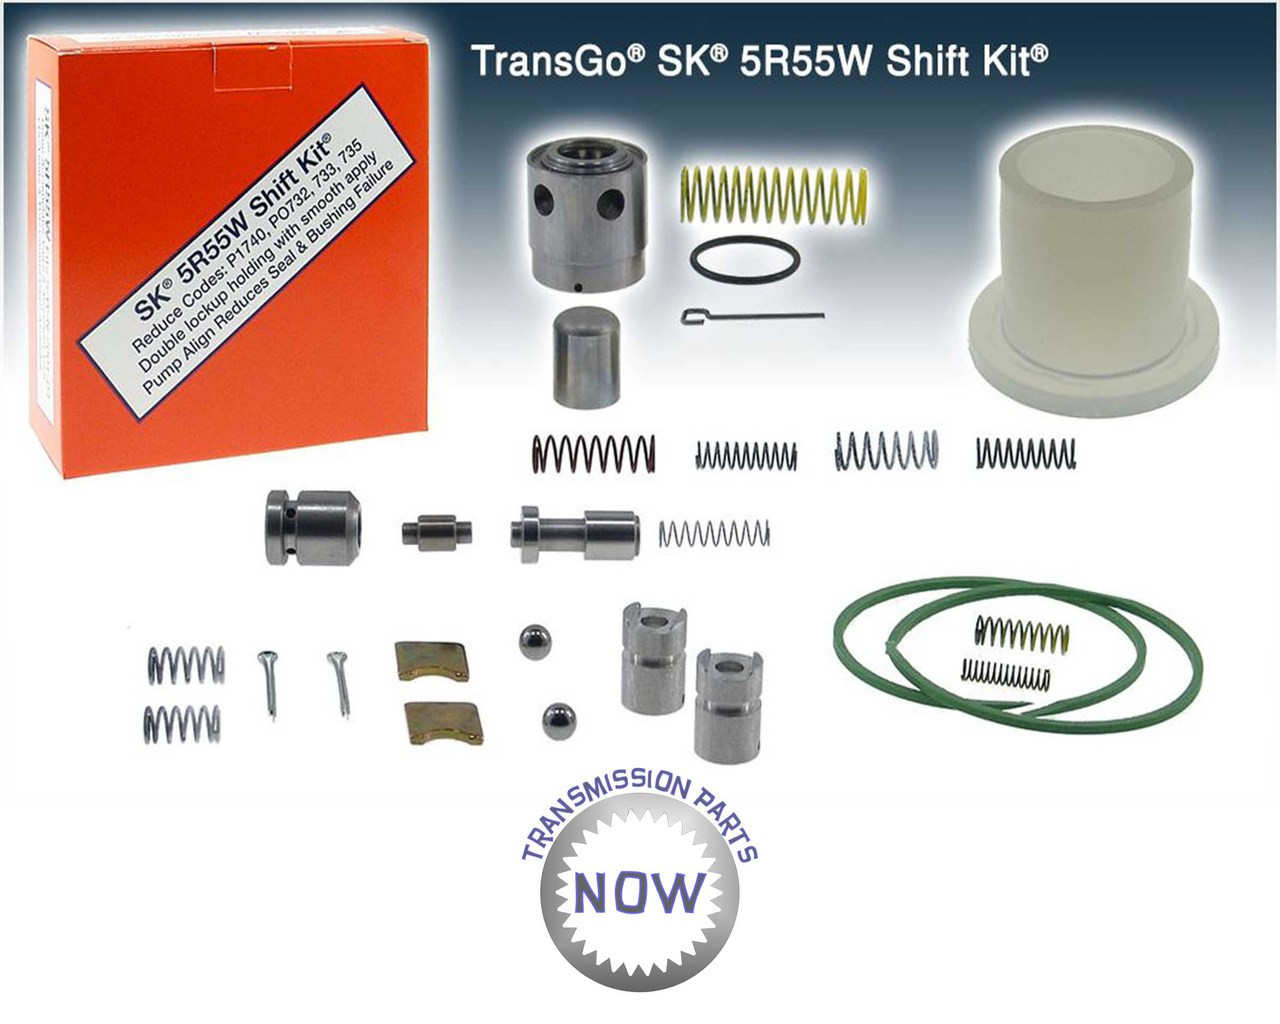 Transgo SK 5R55W Shift kit, Upgrade your transmission.